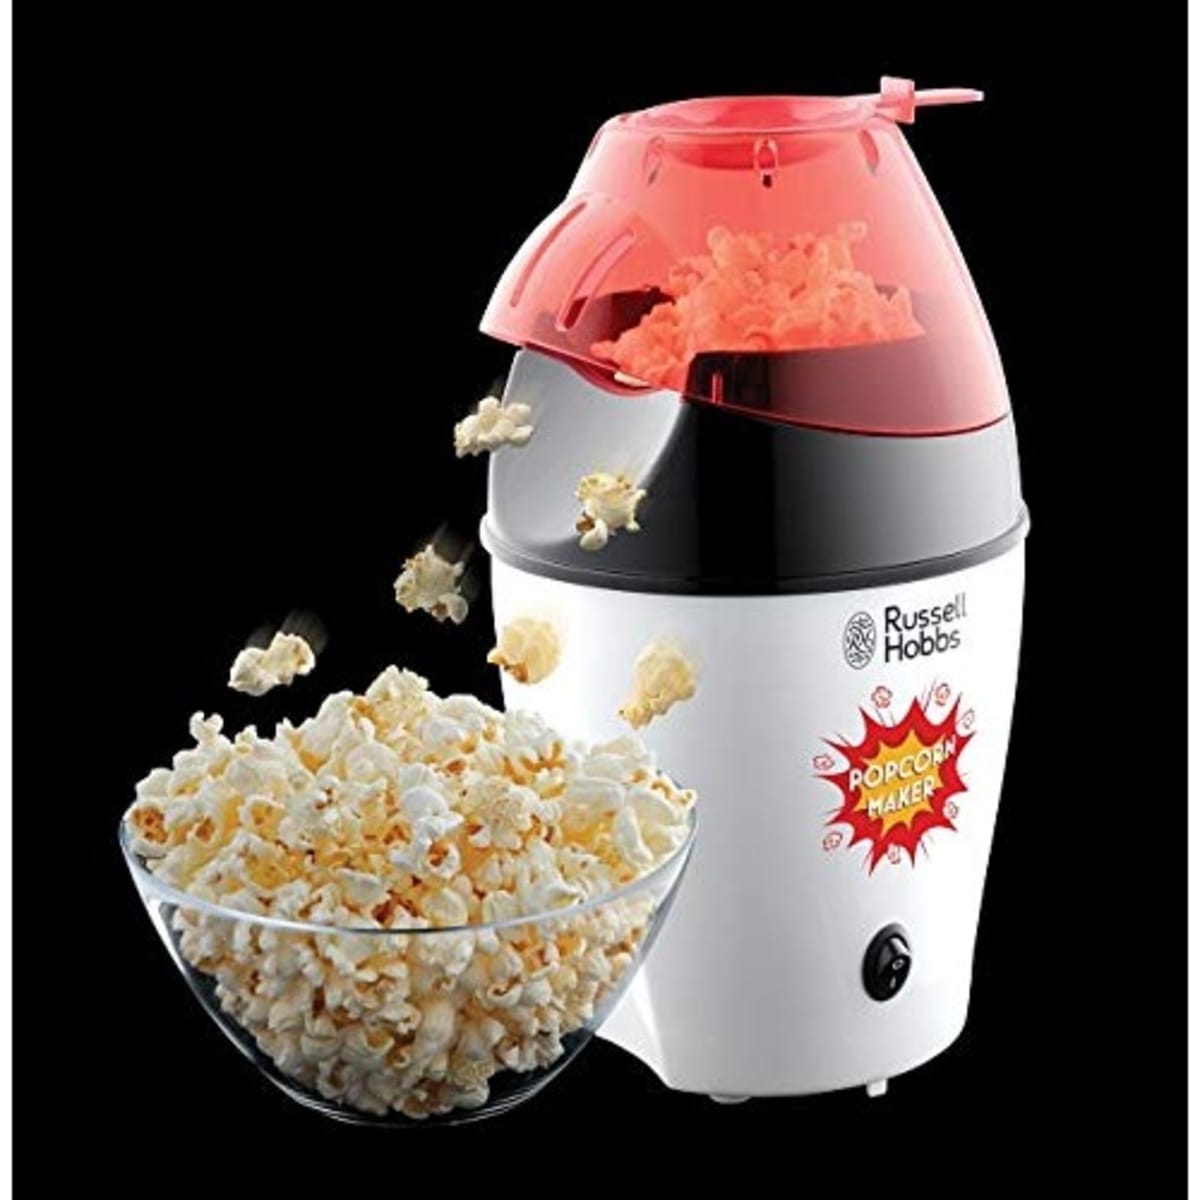 Russell Hobbs Fiesta Popcorn Maker Konga Online Shopping